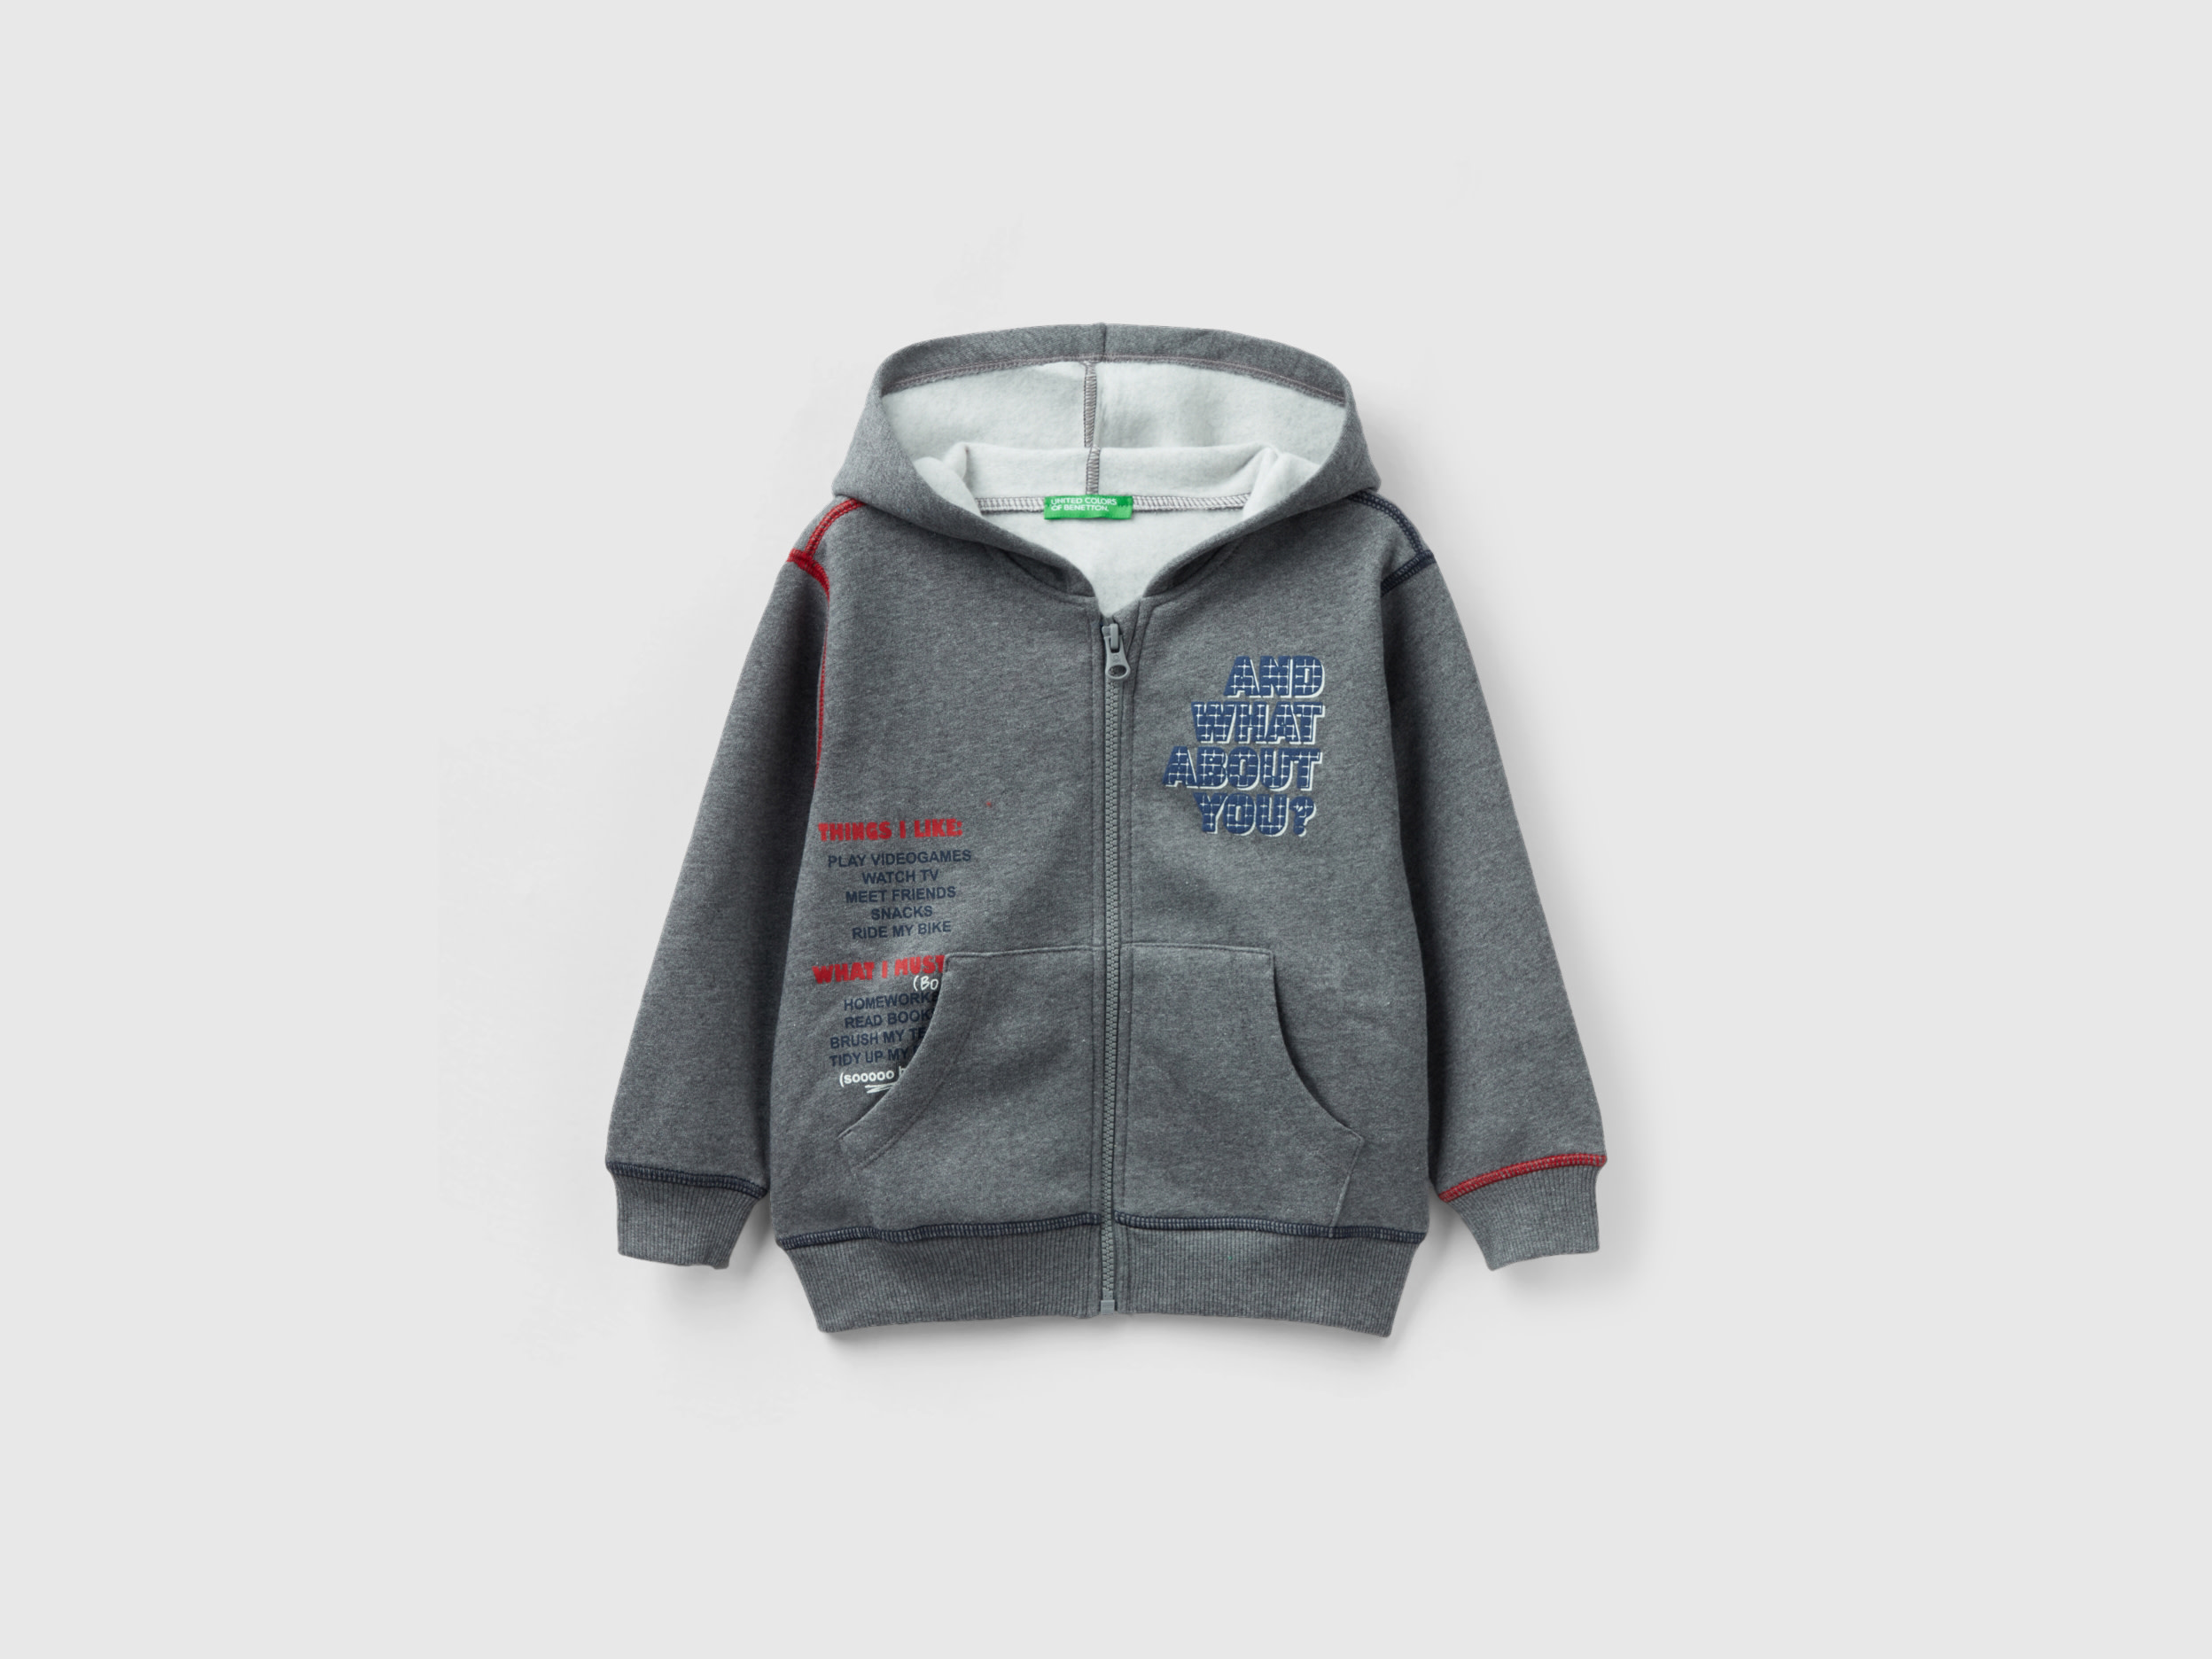 Benetton, Oversized Sweatshirt With Hood And Print, size 4-5, Dark Gray, Kids